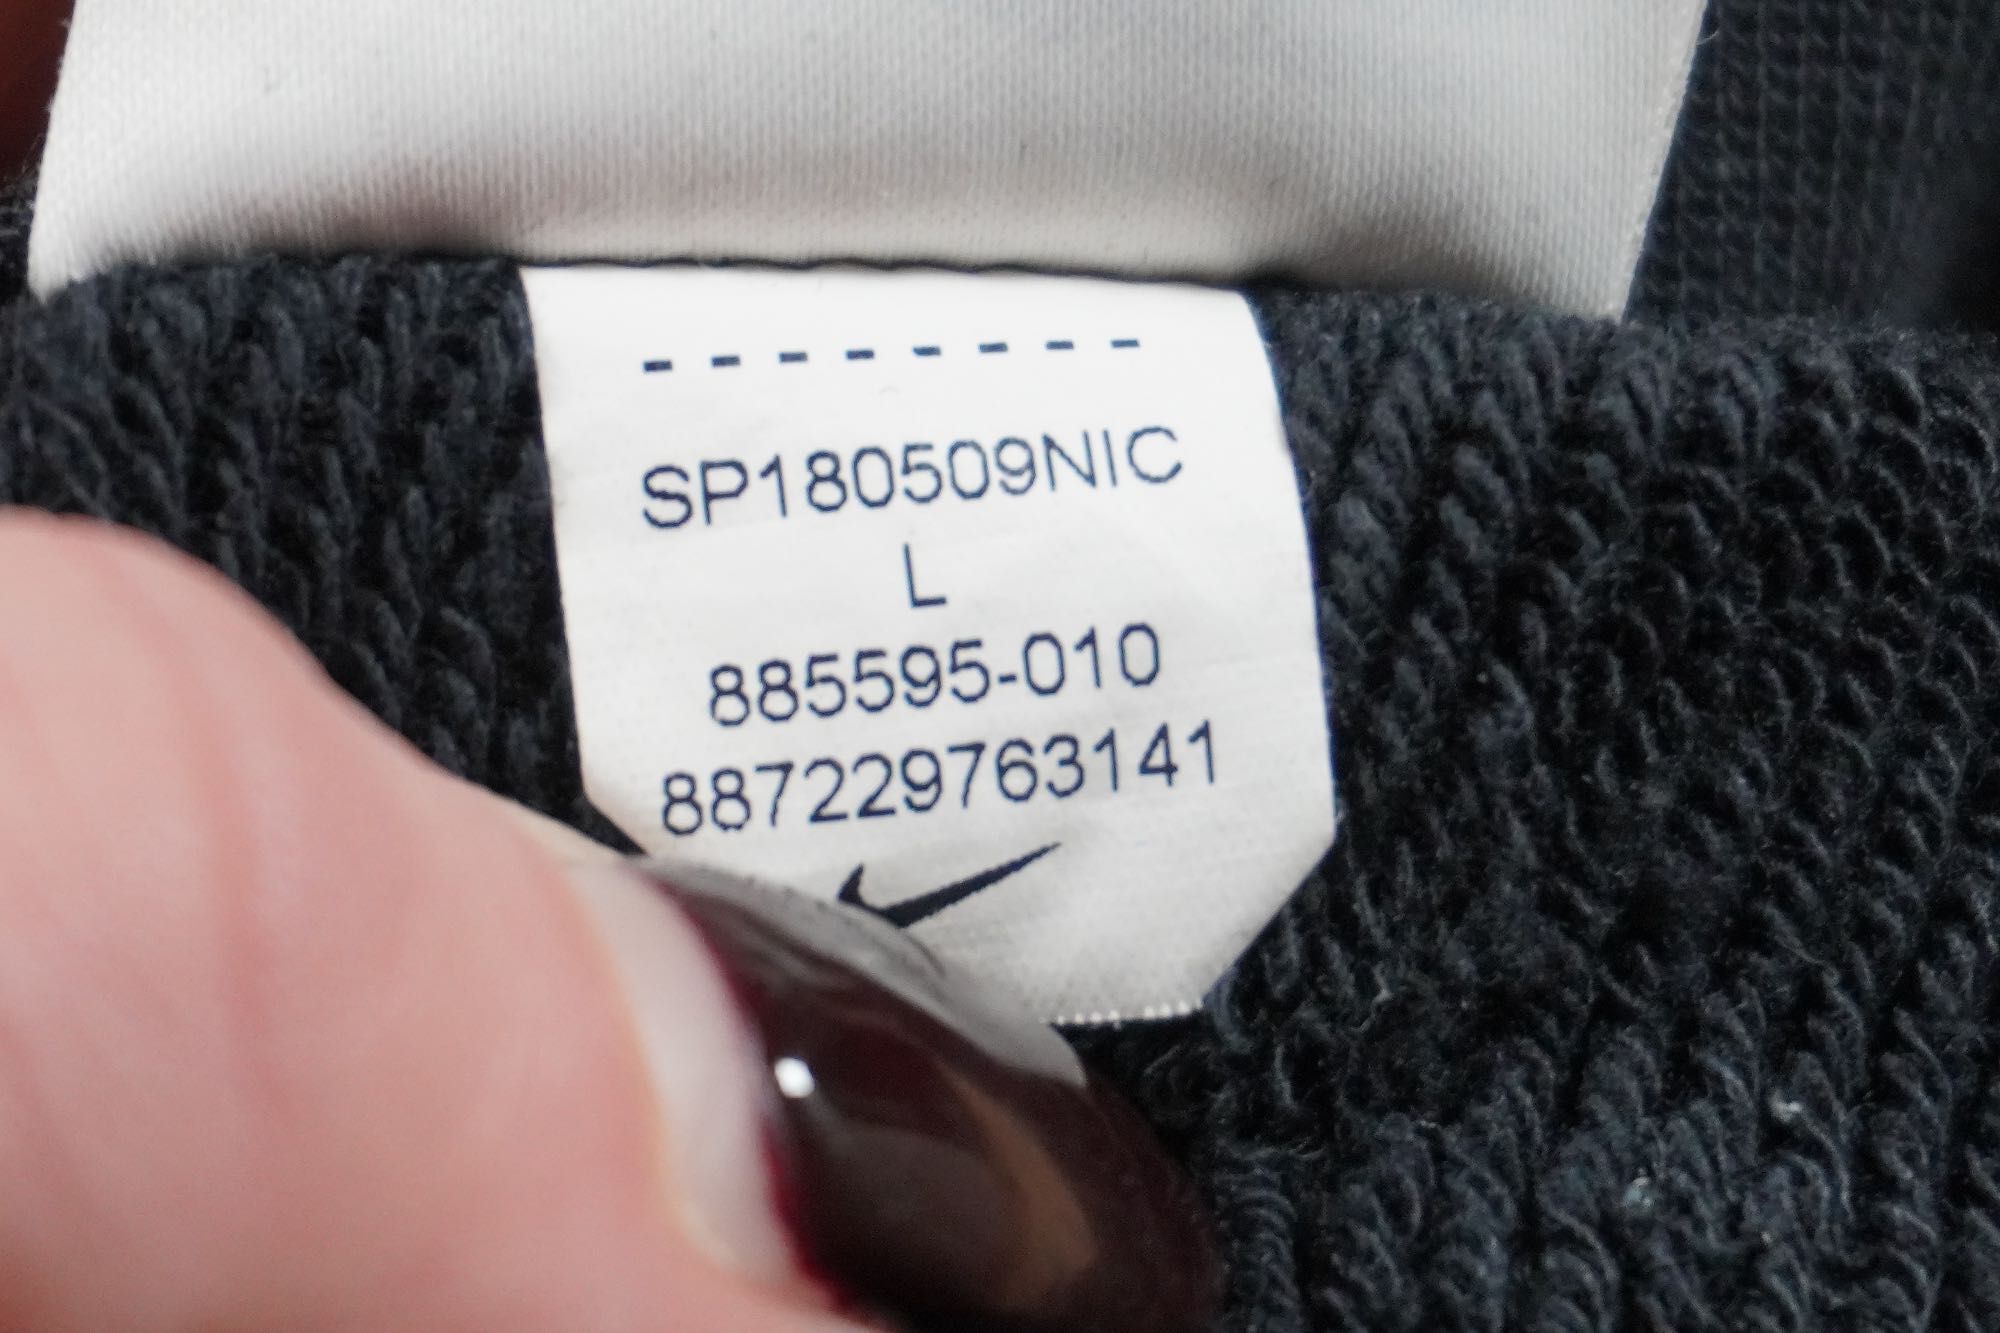 Nike bluza damska rozpinana z kapturem czarna L/XL